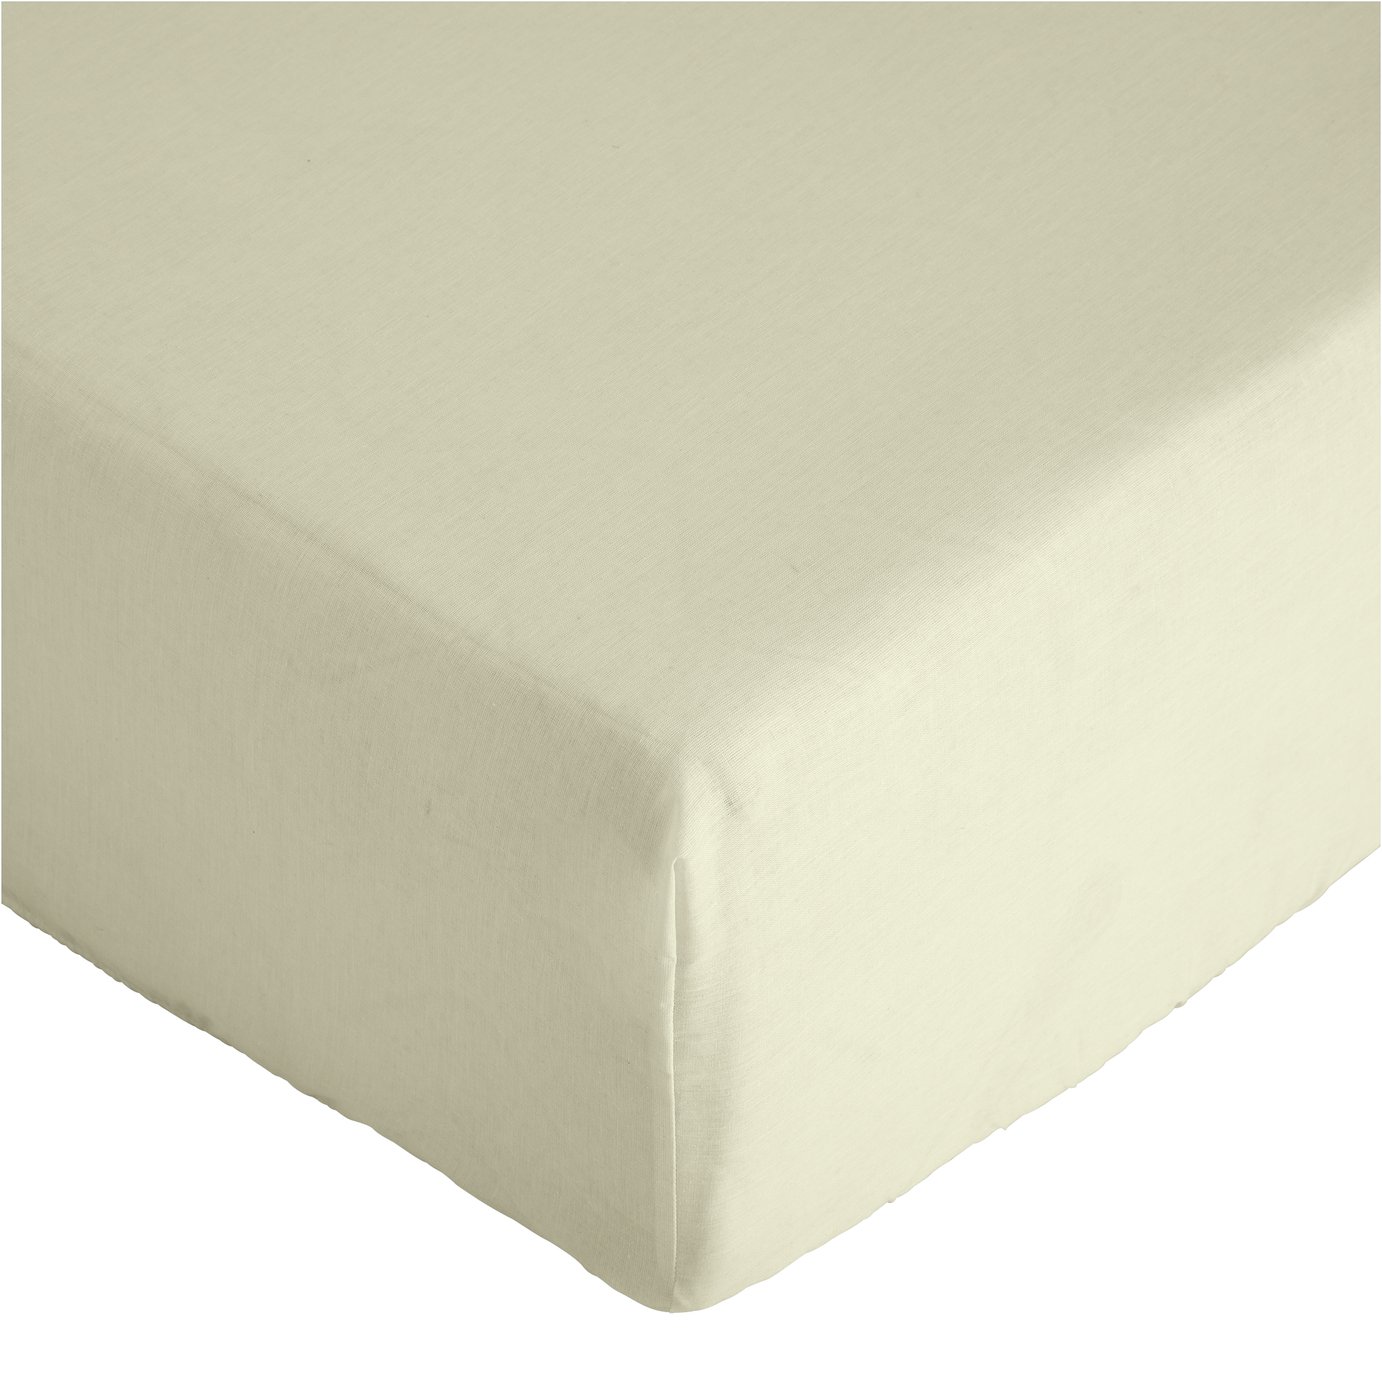 Argos Home Plain Cream Fitted Sheet - Single